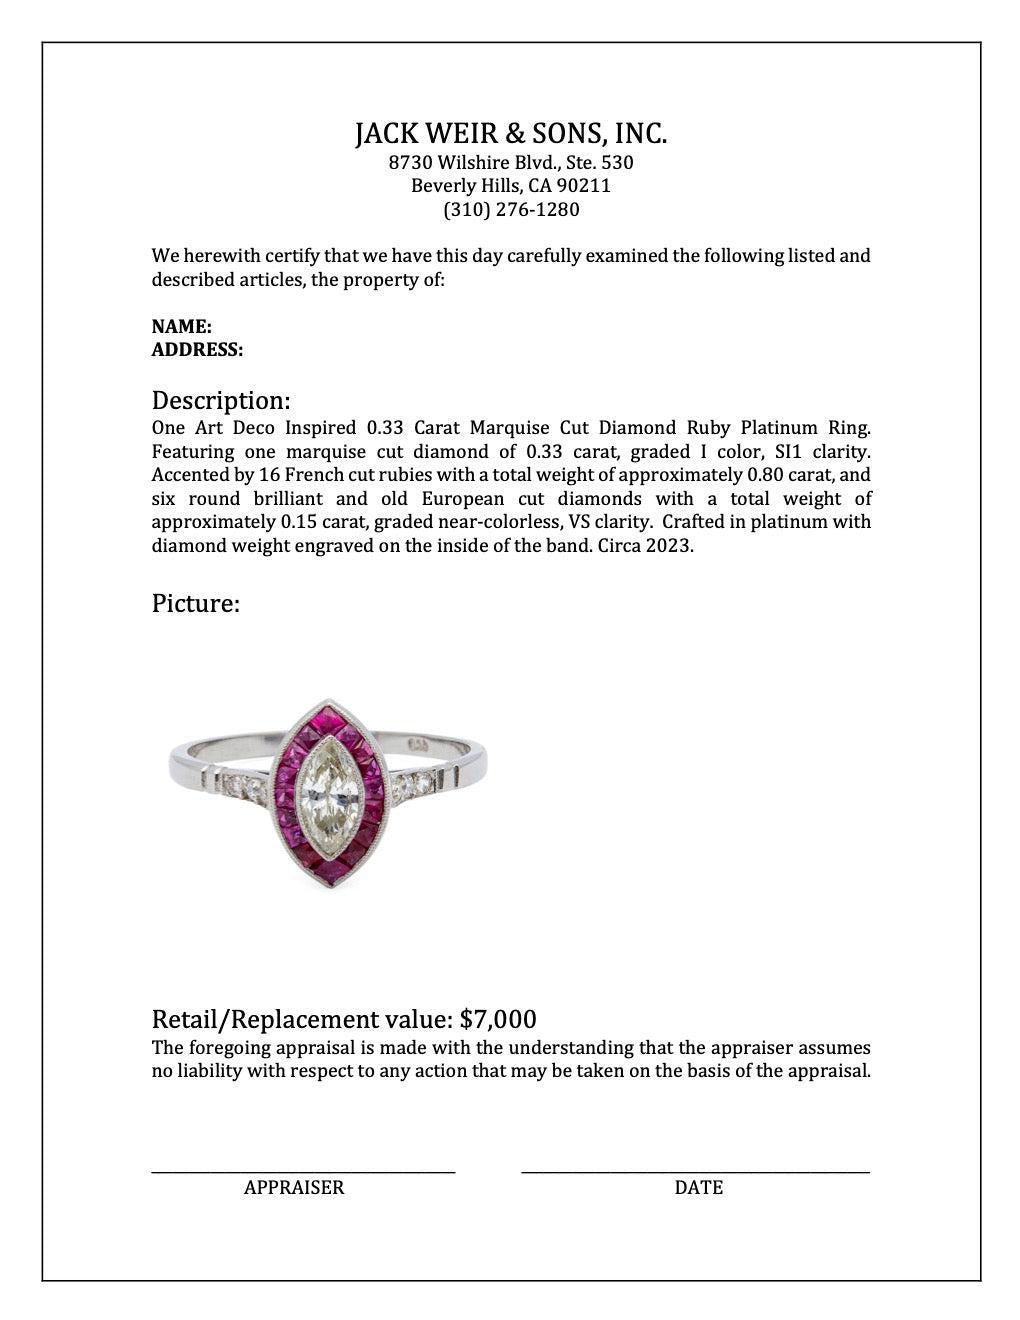 Art Deco Inspired 0.33 Carat Marquise Cut Diamond Ruby Platinum Ring  Jack Weir & Sons   